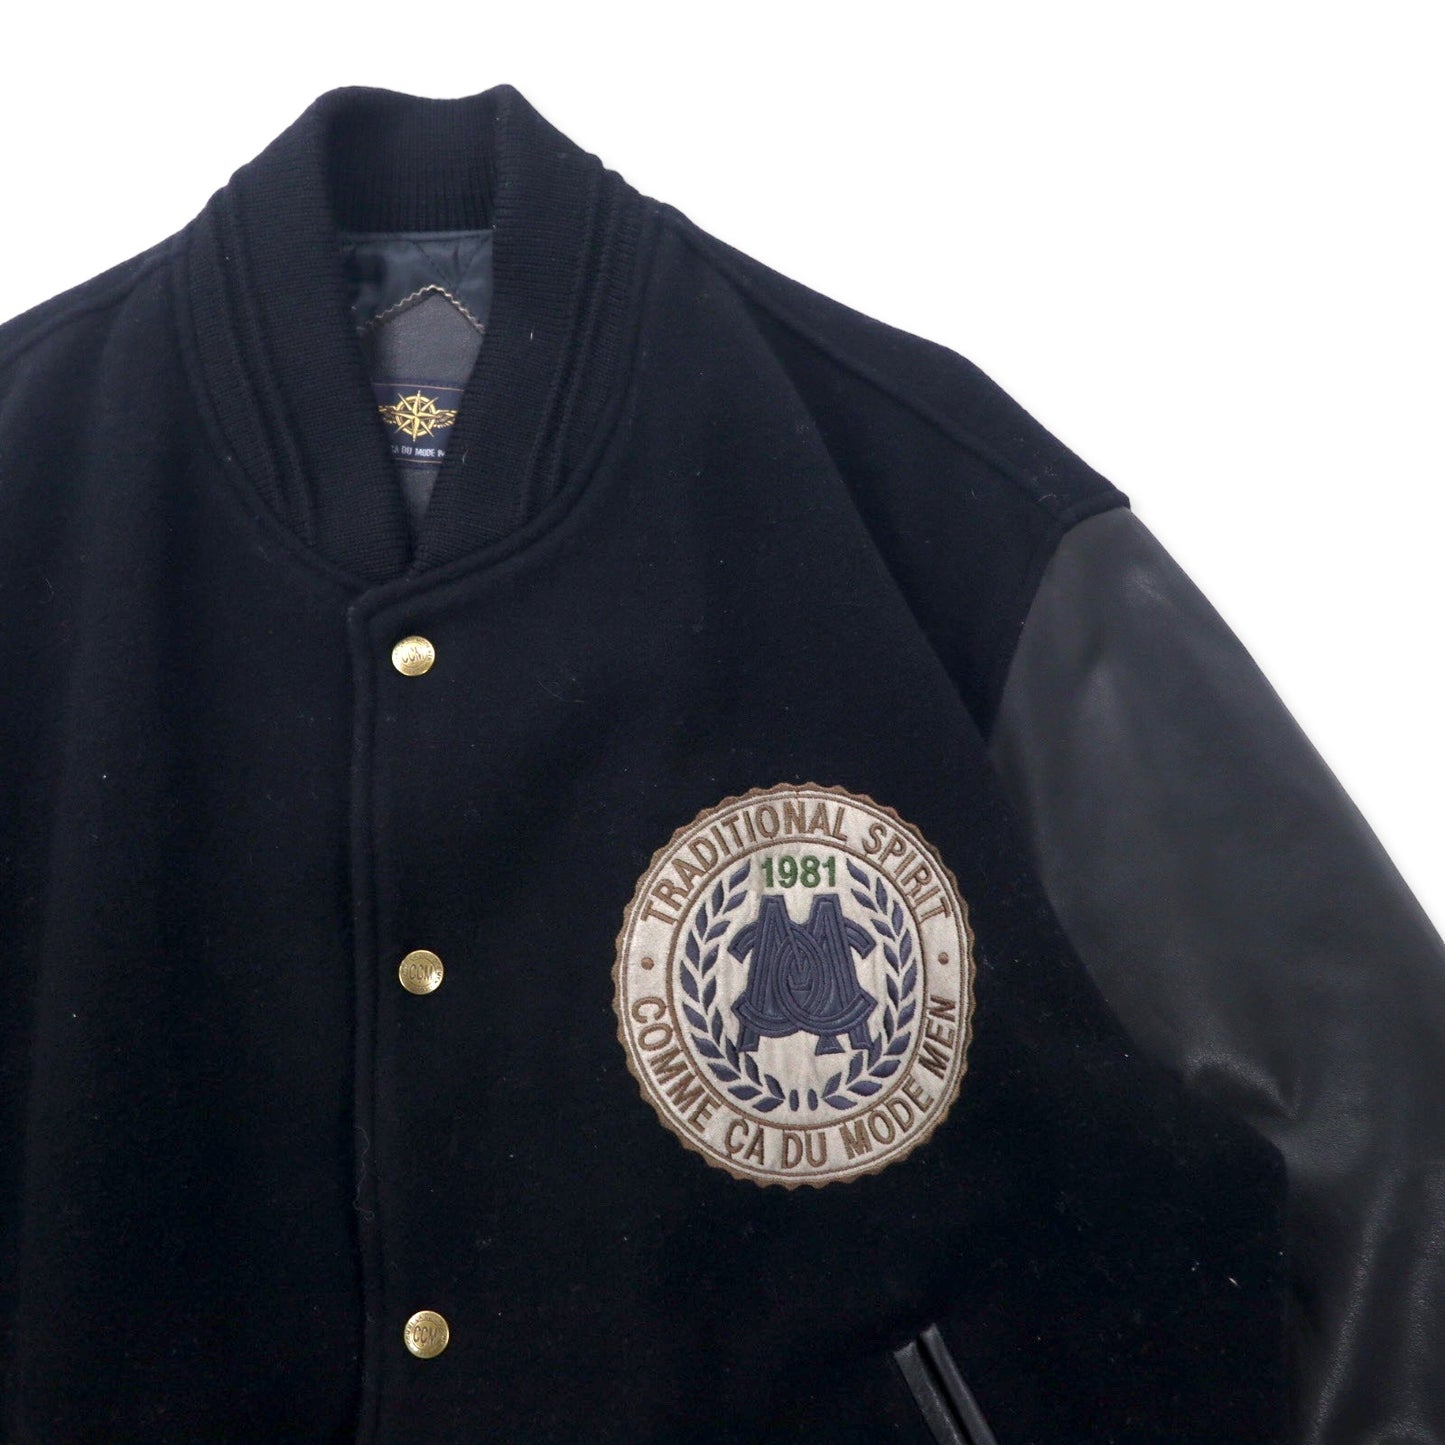 COMME CA DU MODE MEN 90s Sleeve Leather Varsity Jacket XL Black 